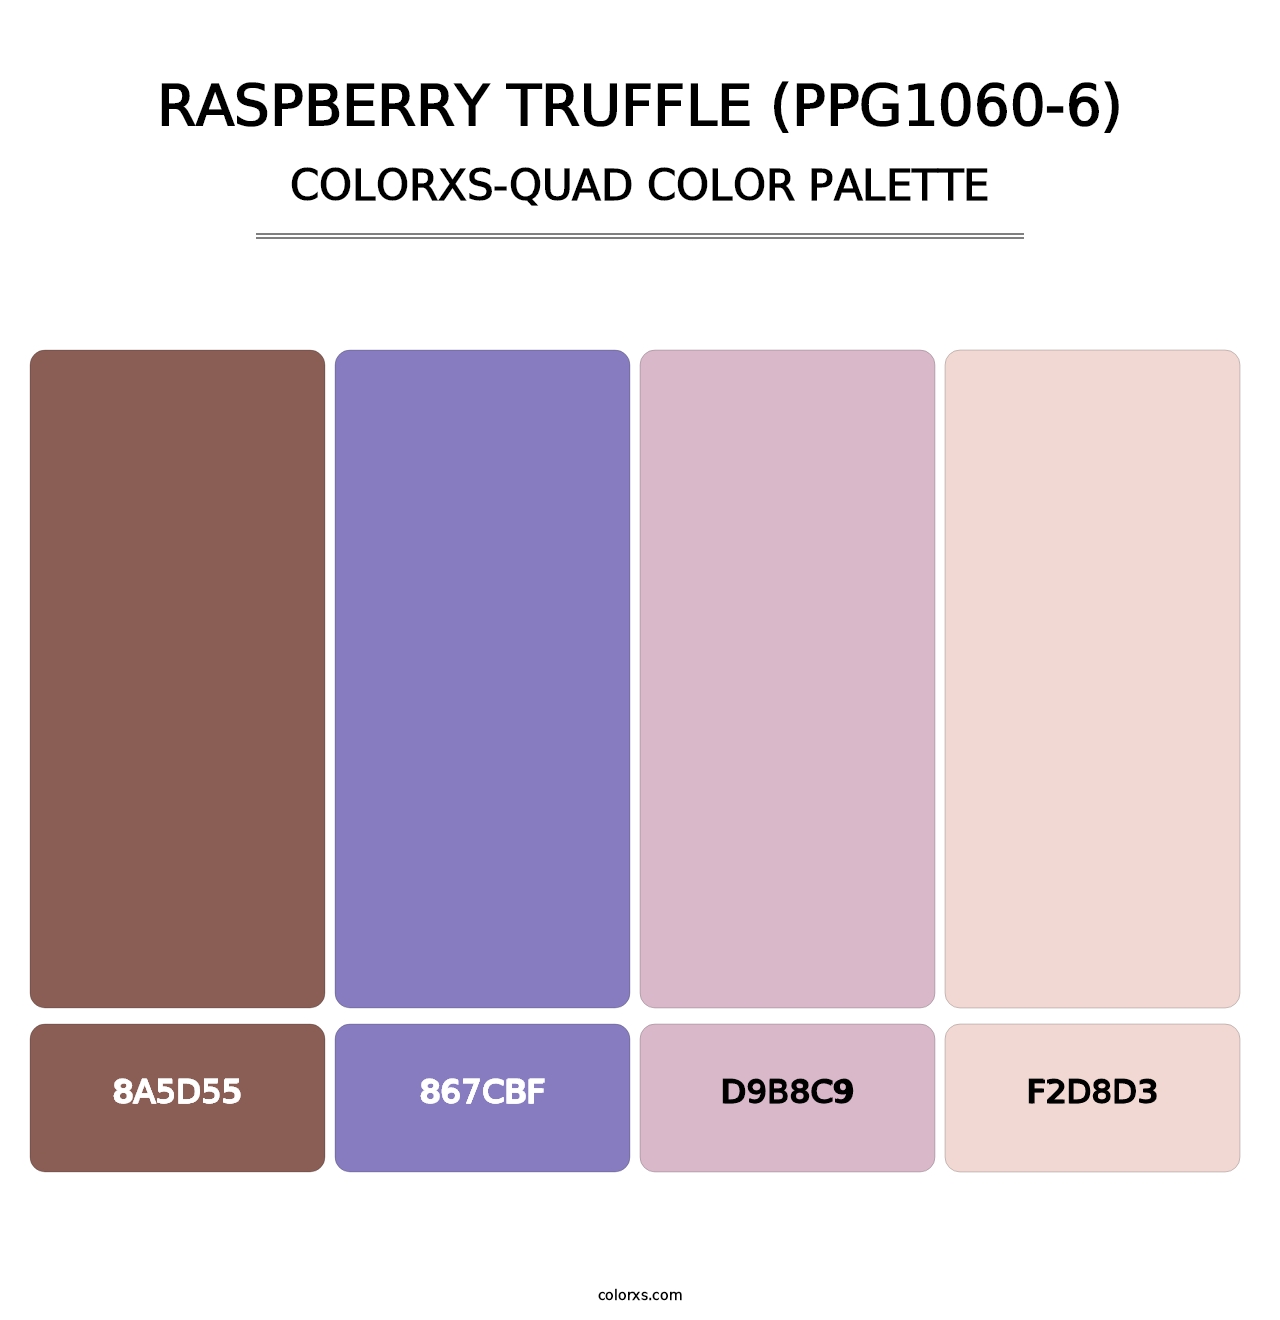 Raspberry Truffle (PPG1060-6) - Colorxs Quad Palette